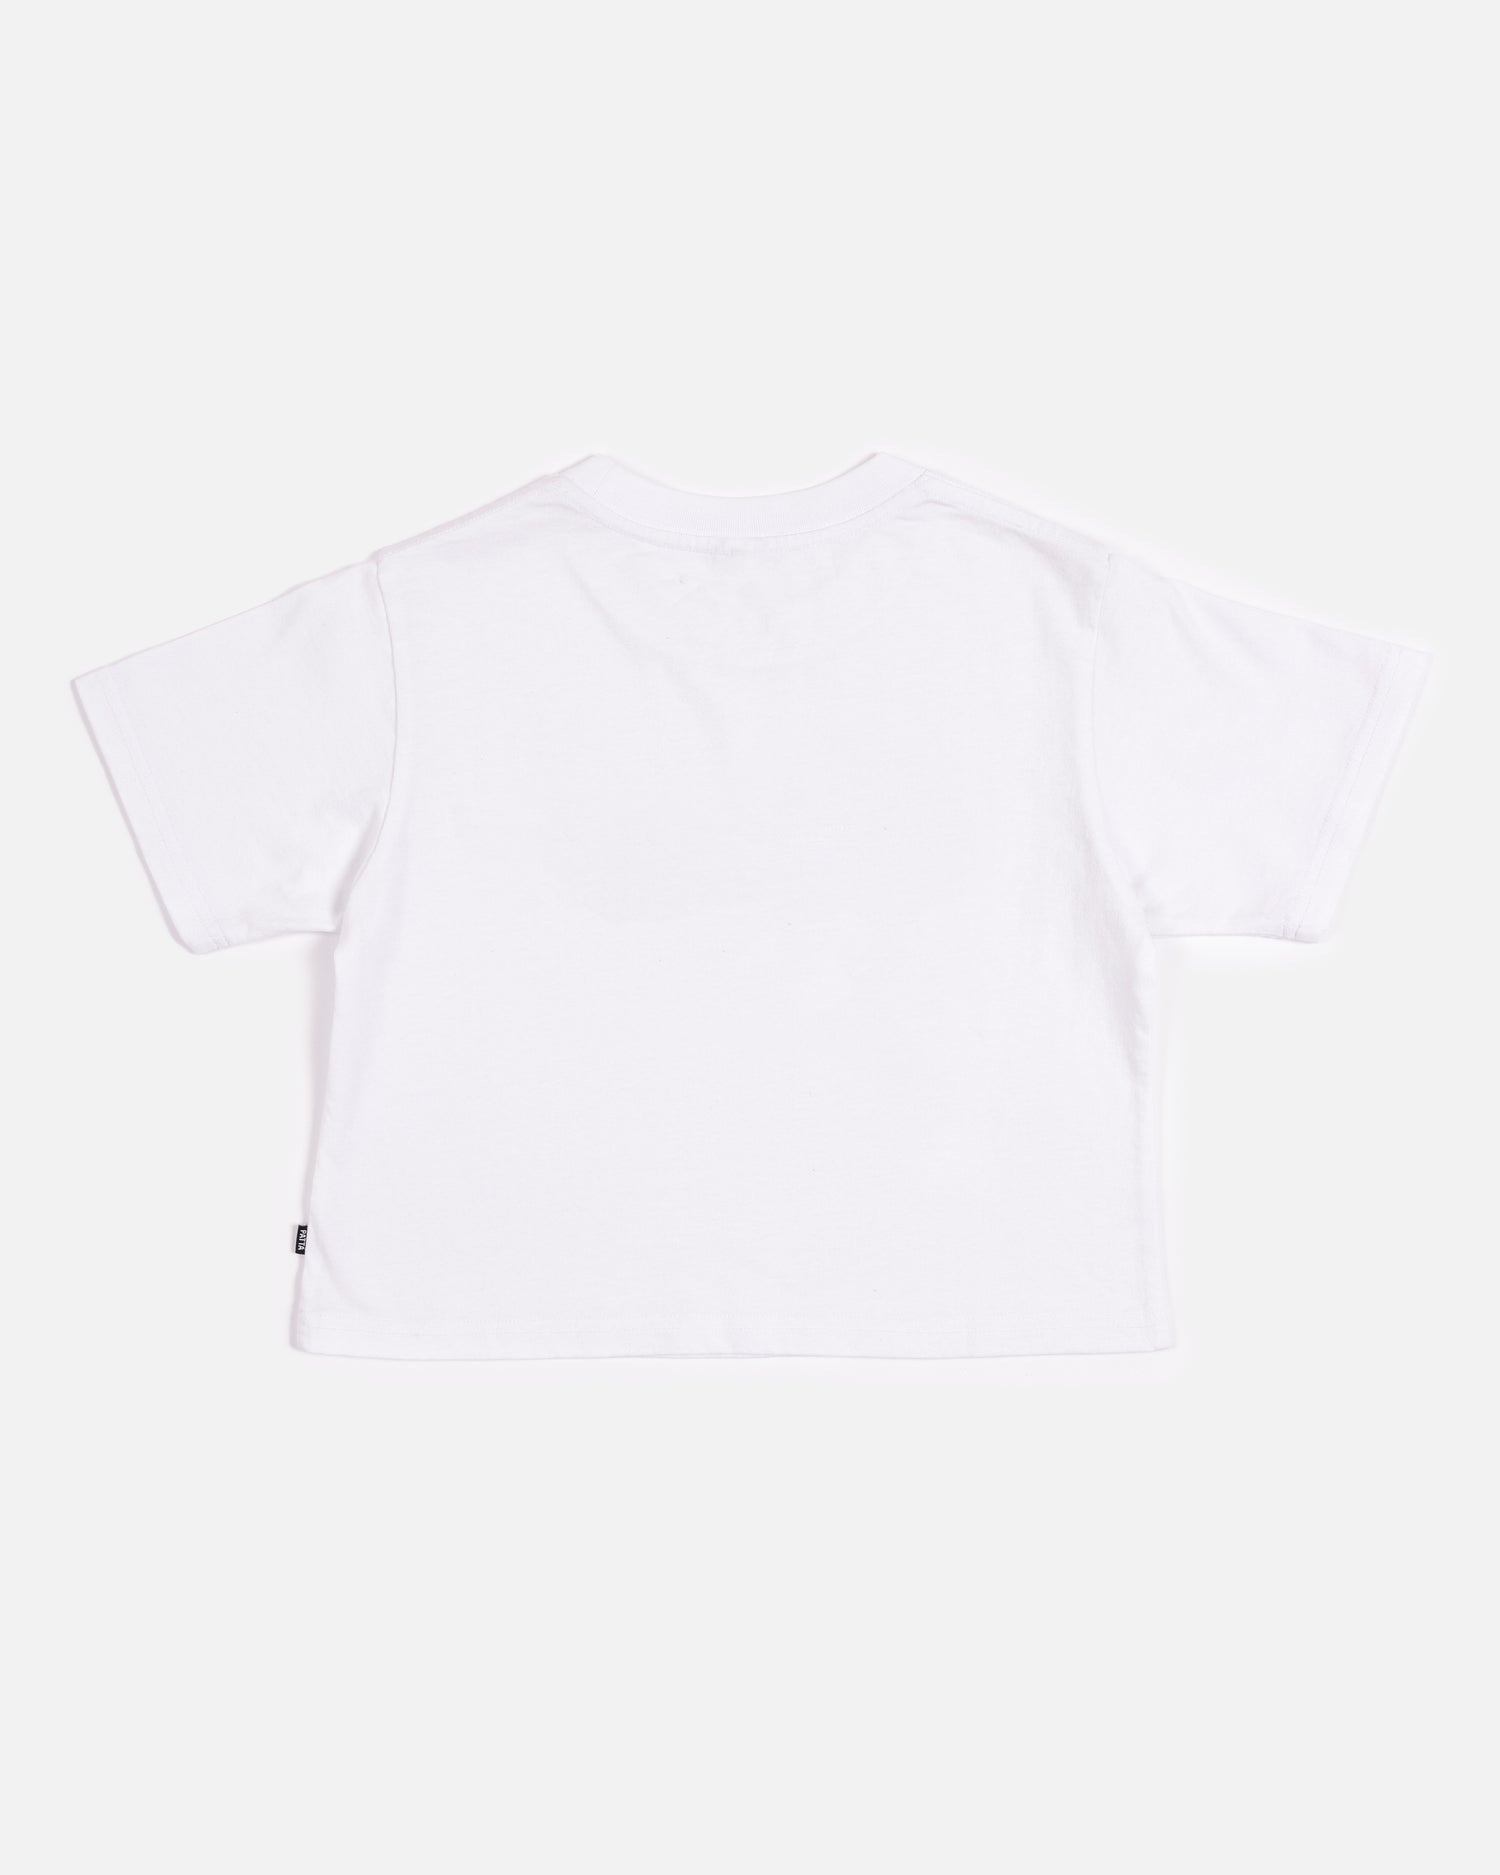 Patta Femme Baby T-Shirt (White)